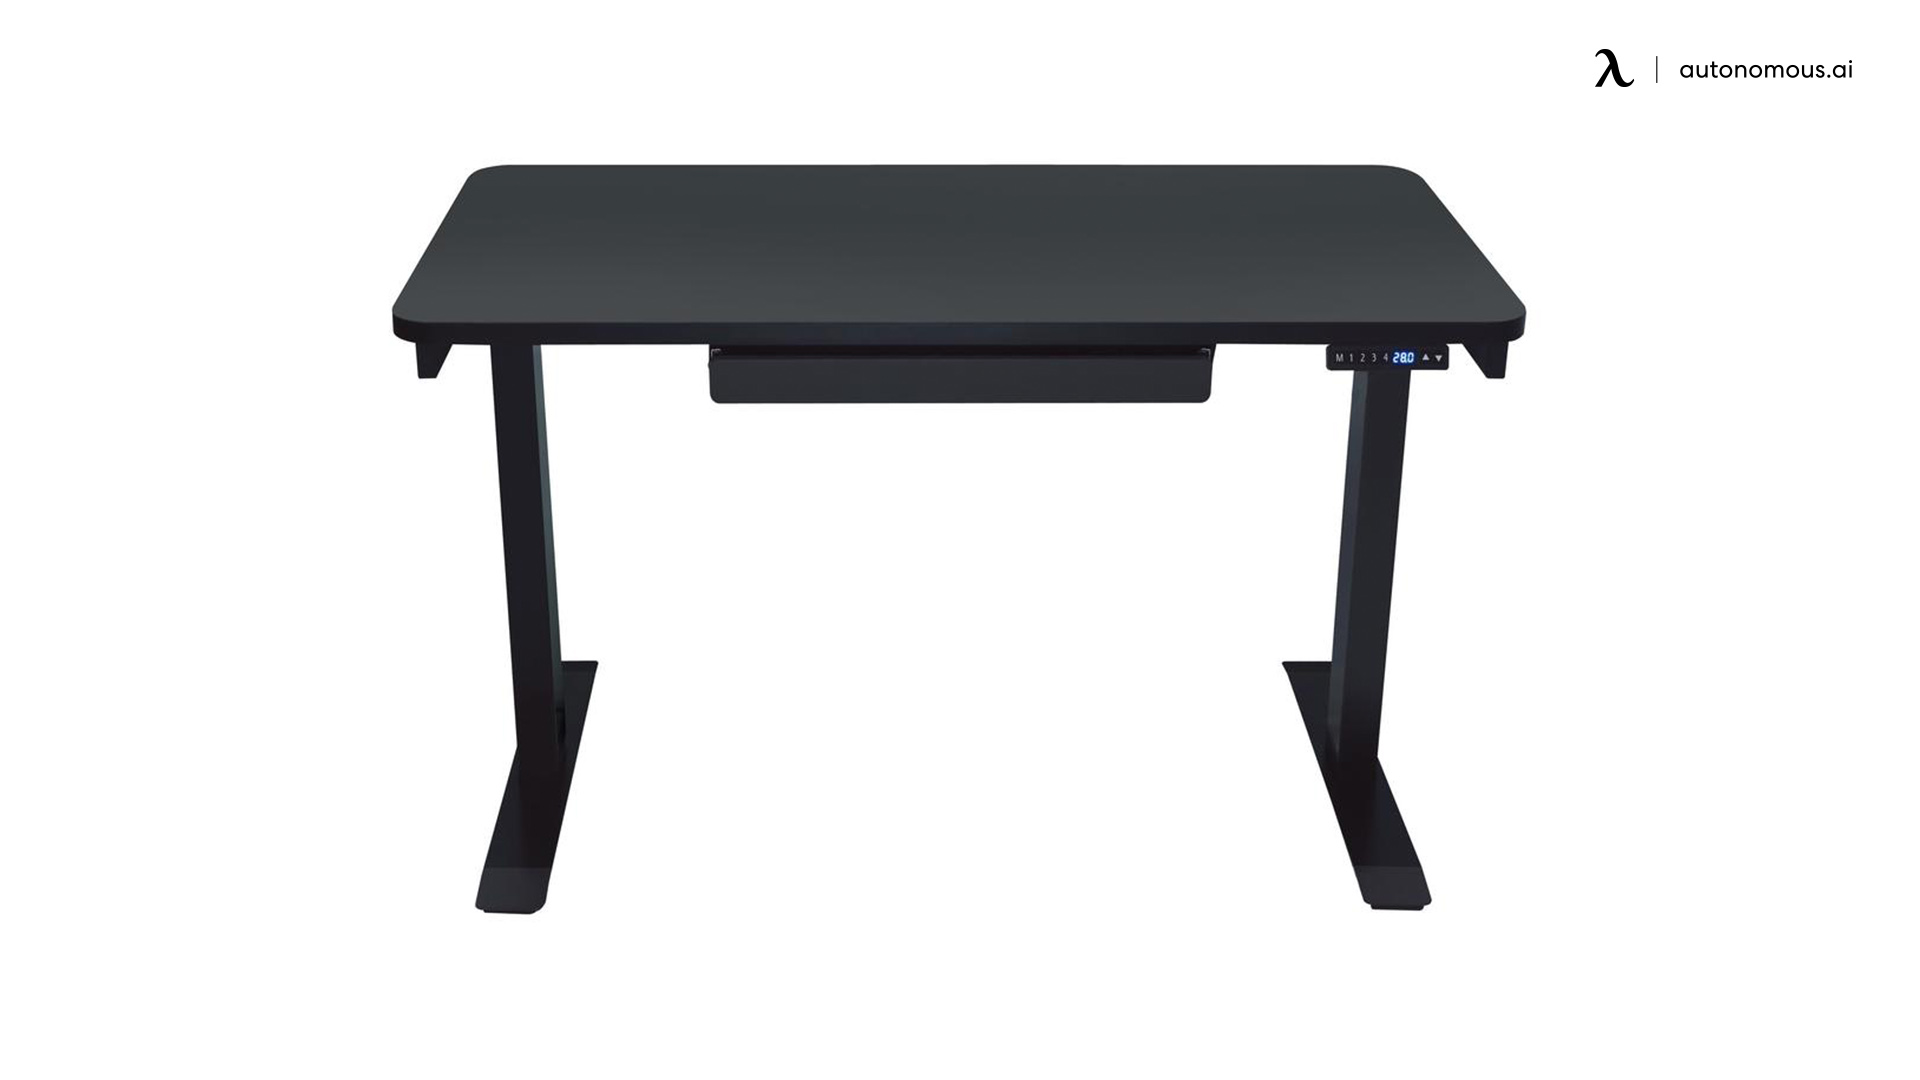 MotionWise 48-Inch Affordable Standing Desk Under $500